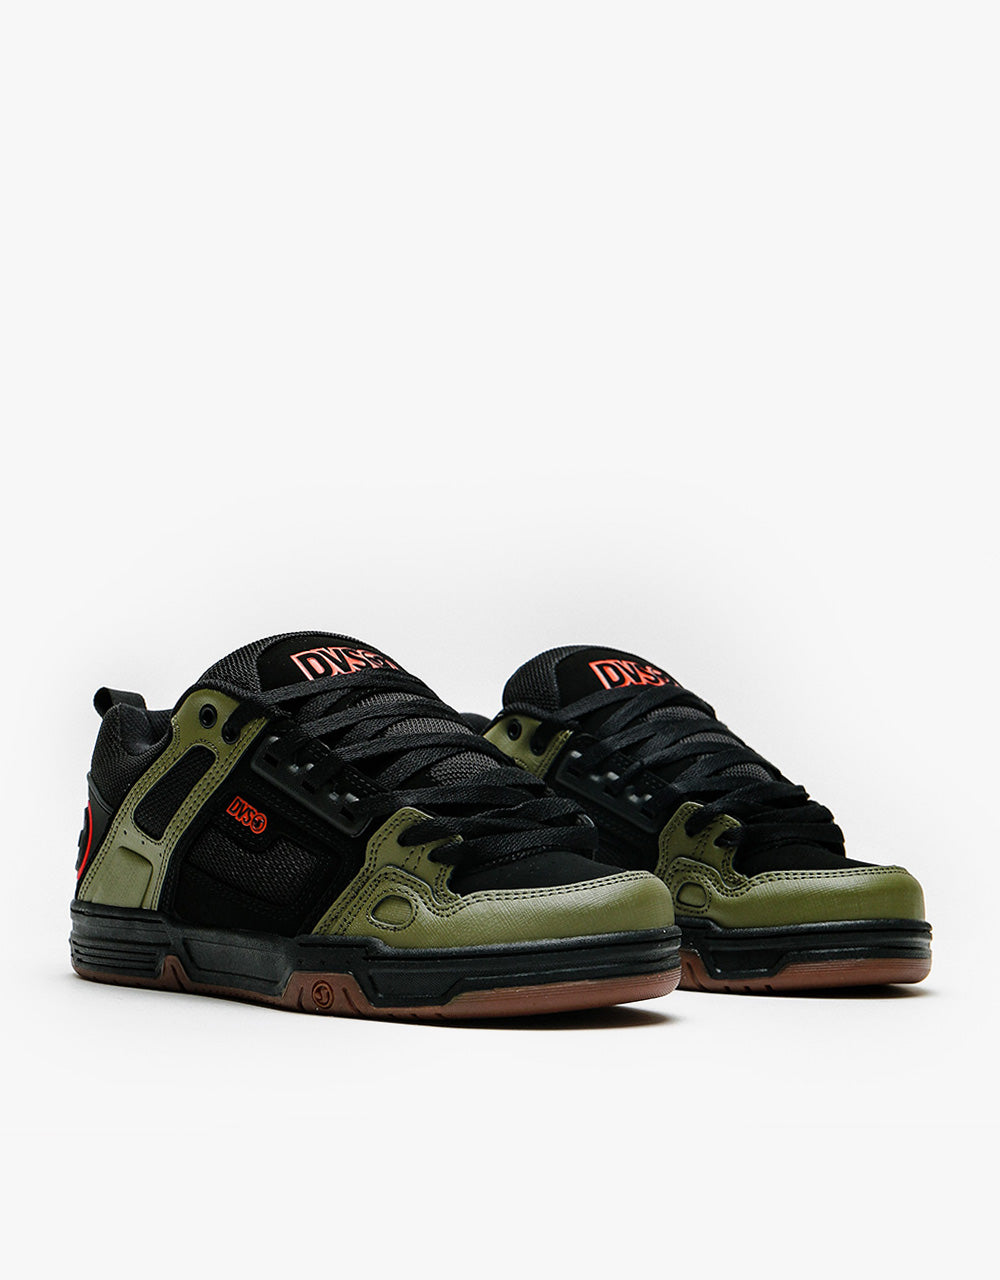 DVS Comanche Skate Shoes - Black/Olive/Orange Nubuck